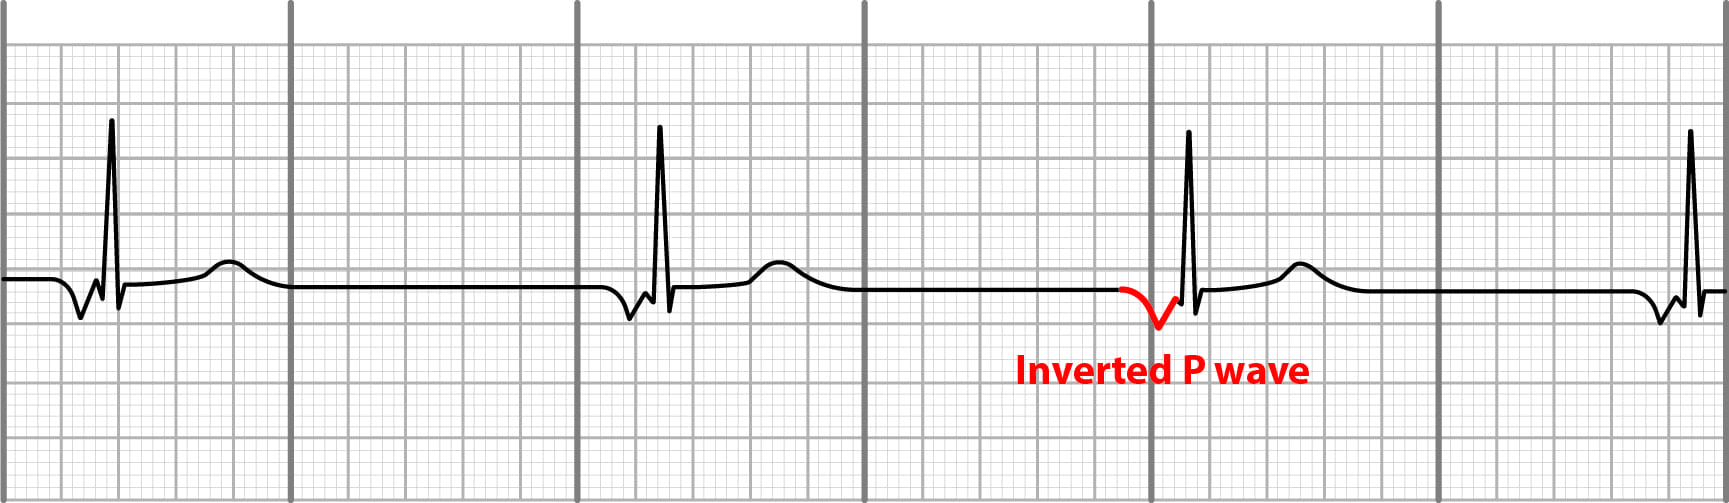 Junctional bradycardia on EKG